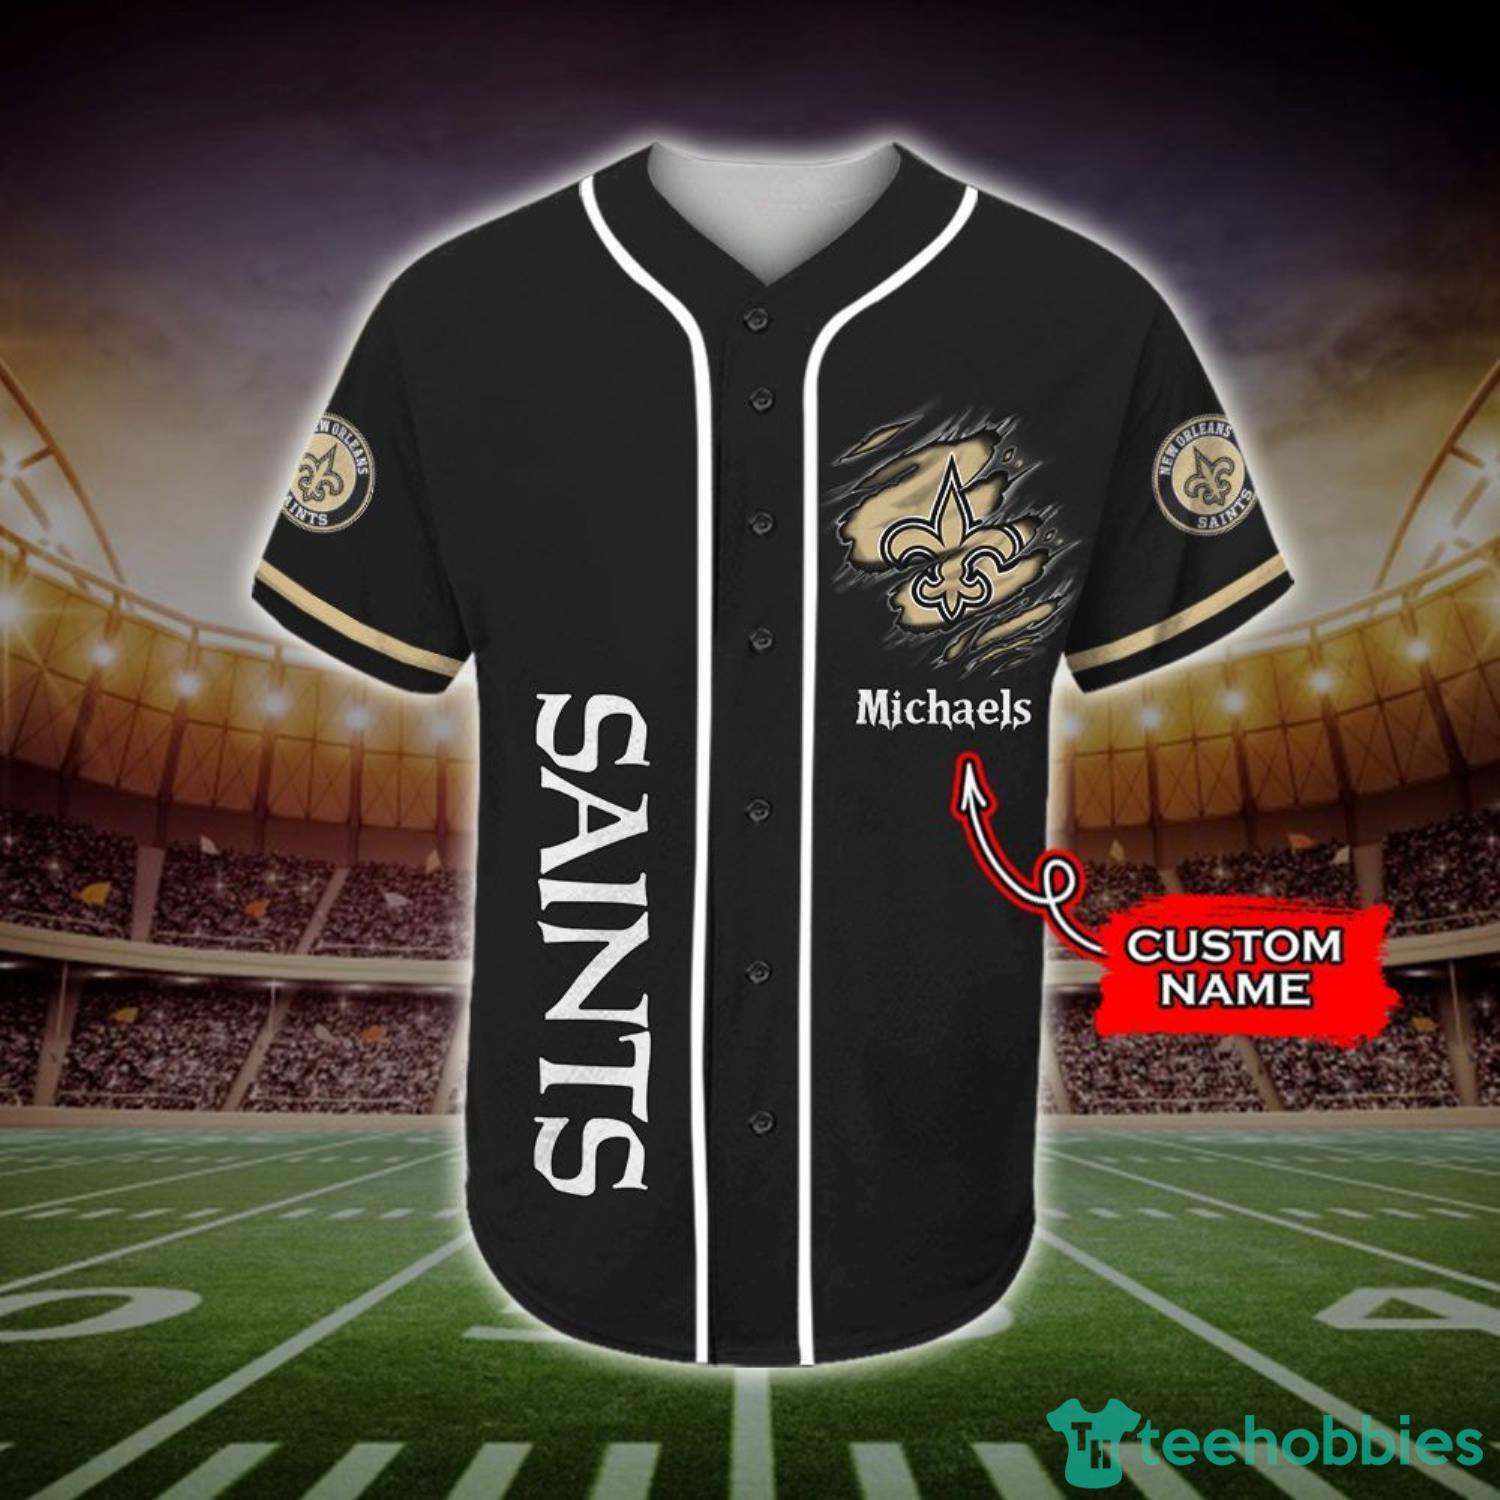 new orleans saints baseball jersey